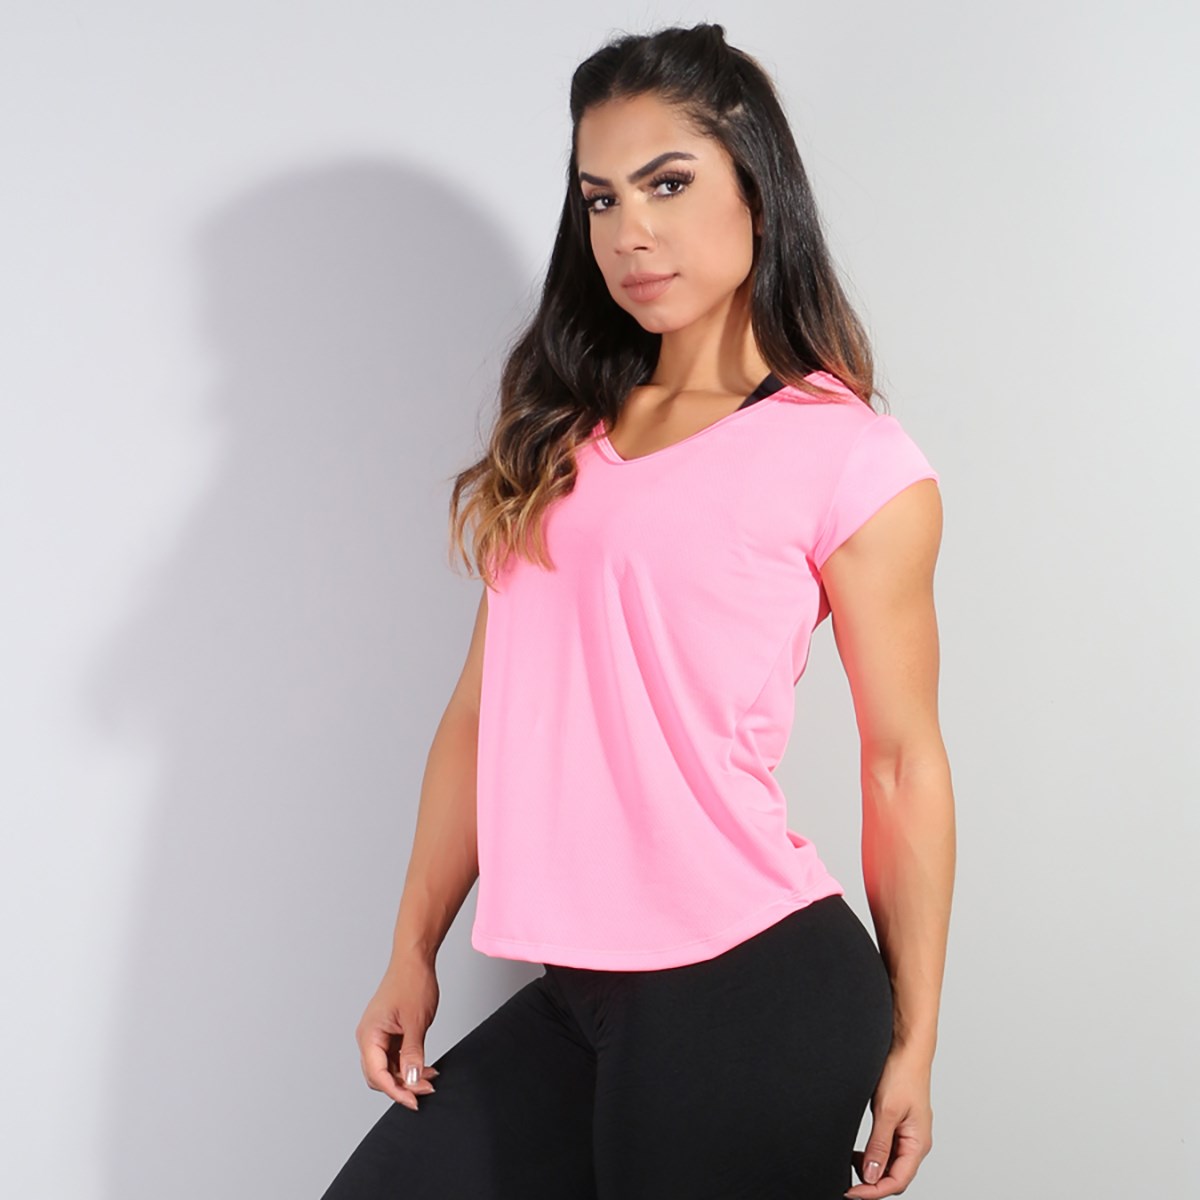 Blusa Fitness Feminina em Dry Fit Rosa Neon | Ref: 3.3.2159-39